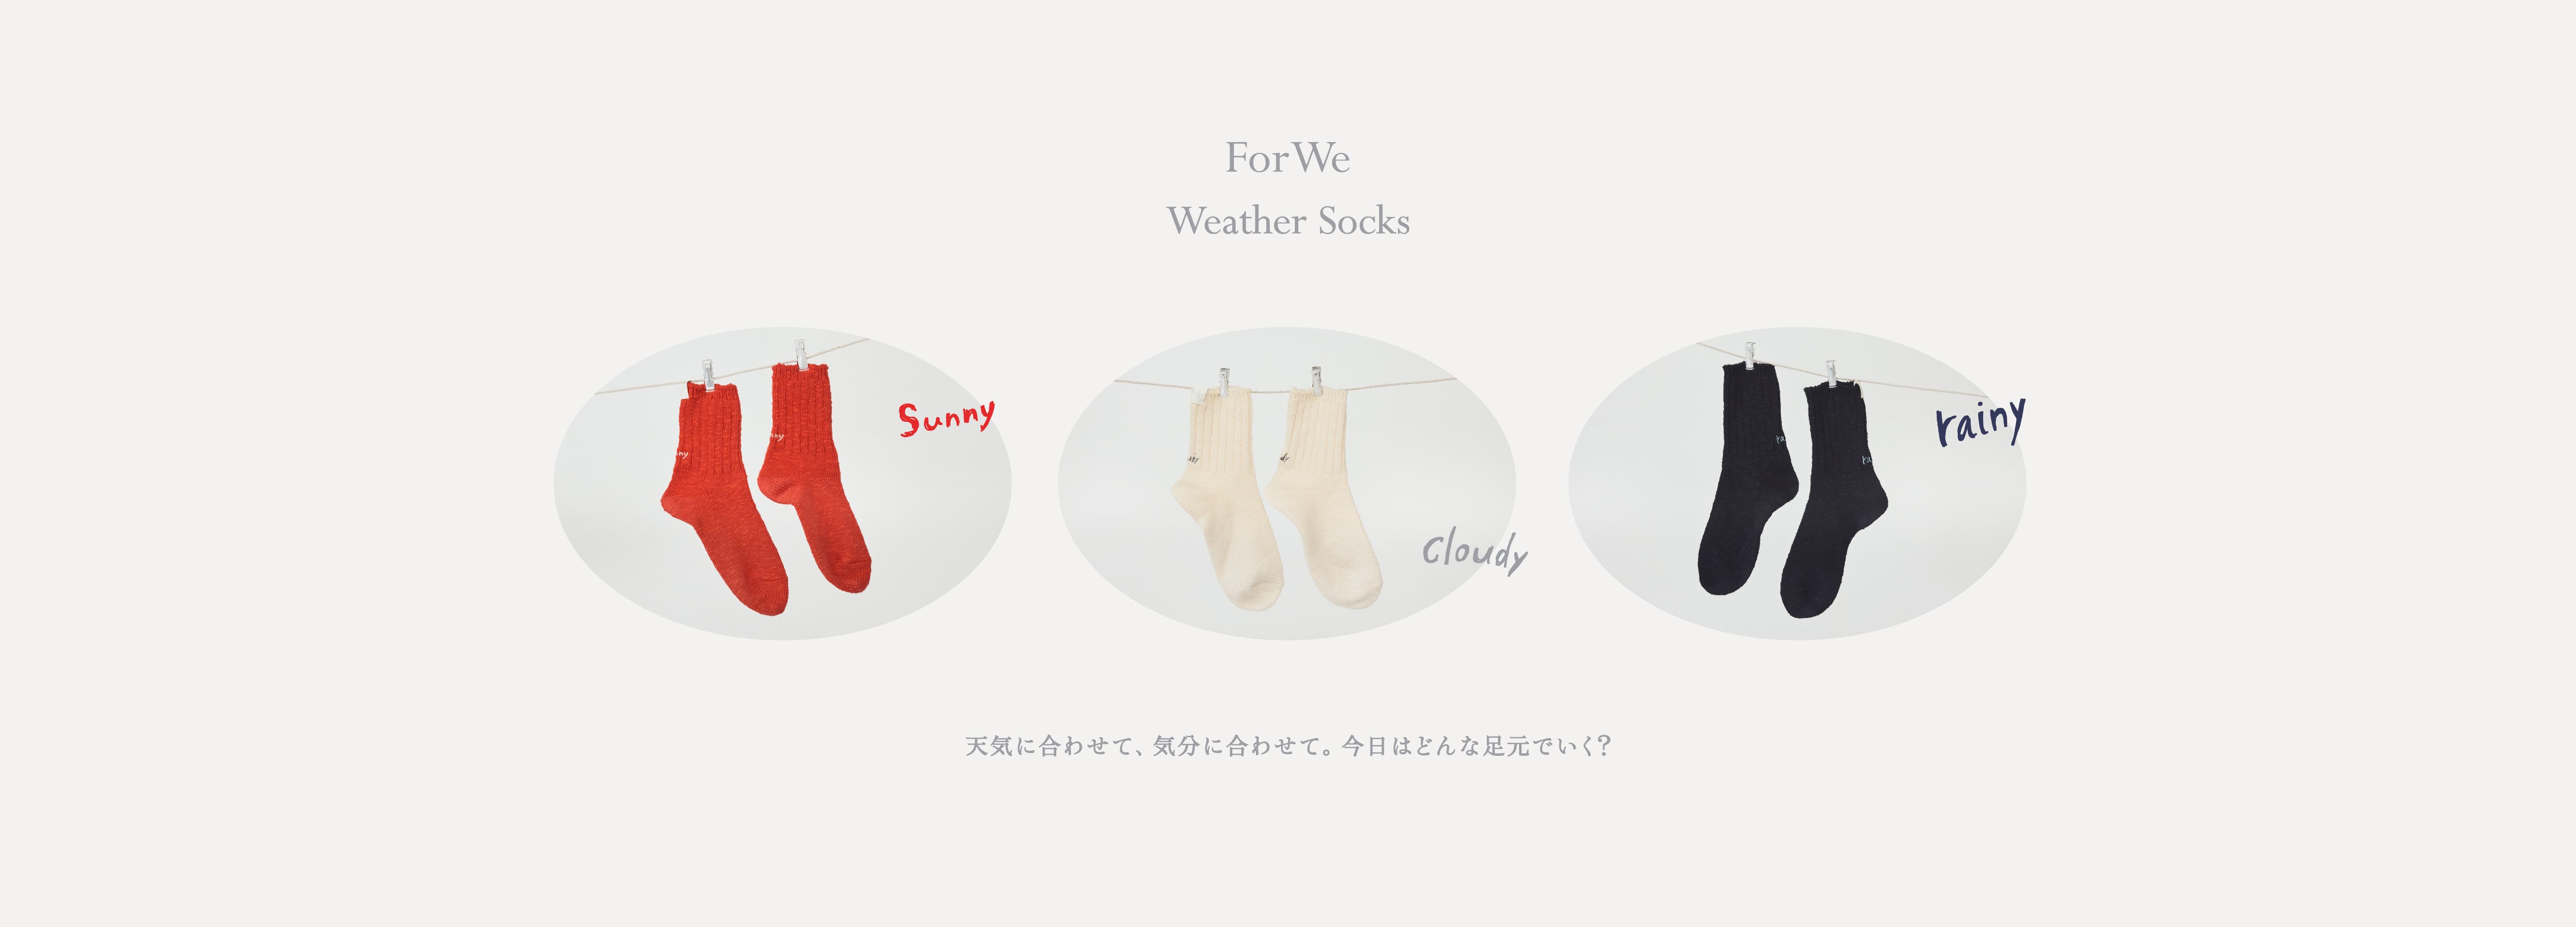 ForWe Weather Socks 天気に合わせて、気分に合わせて。今日はどんな足元でいく？